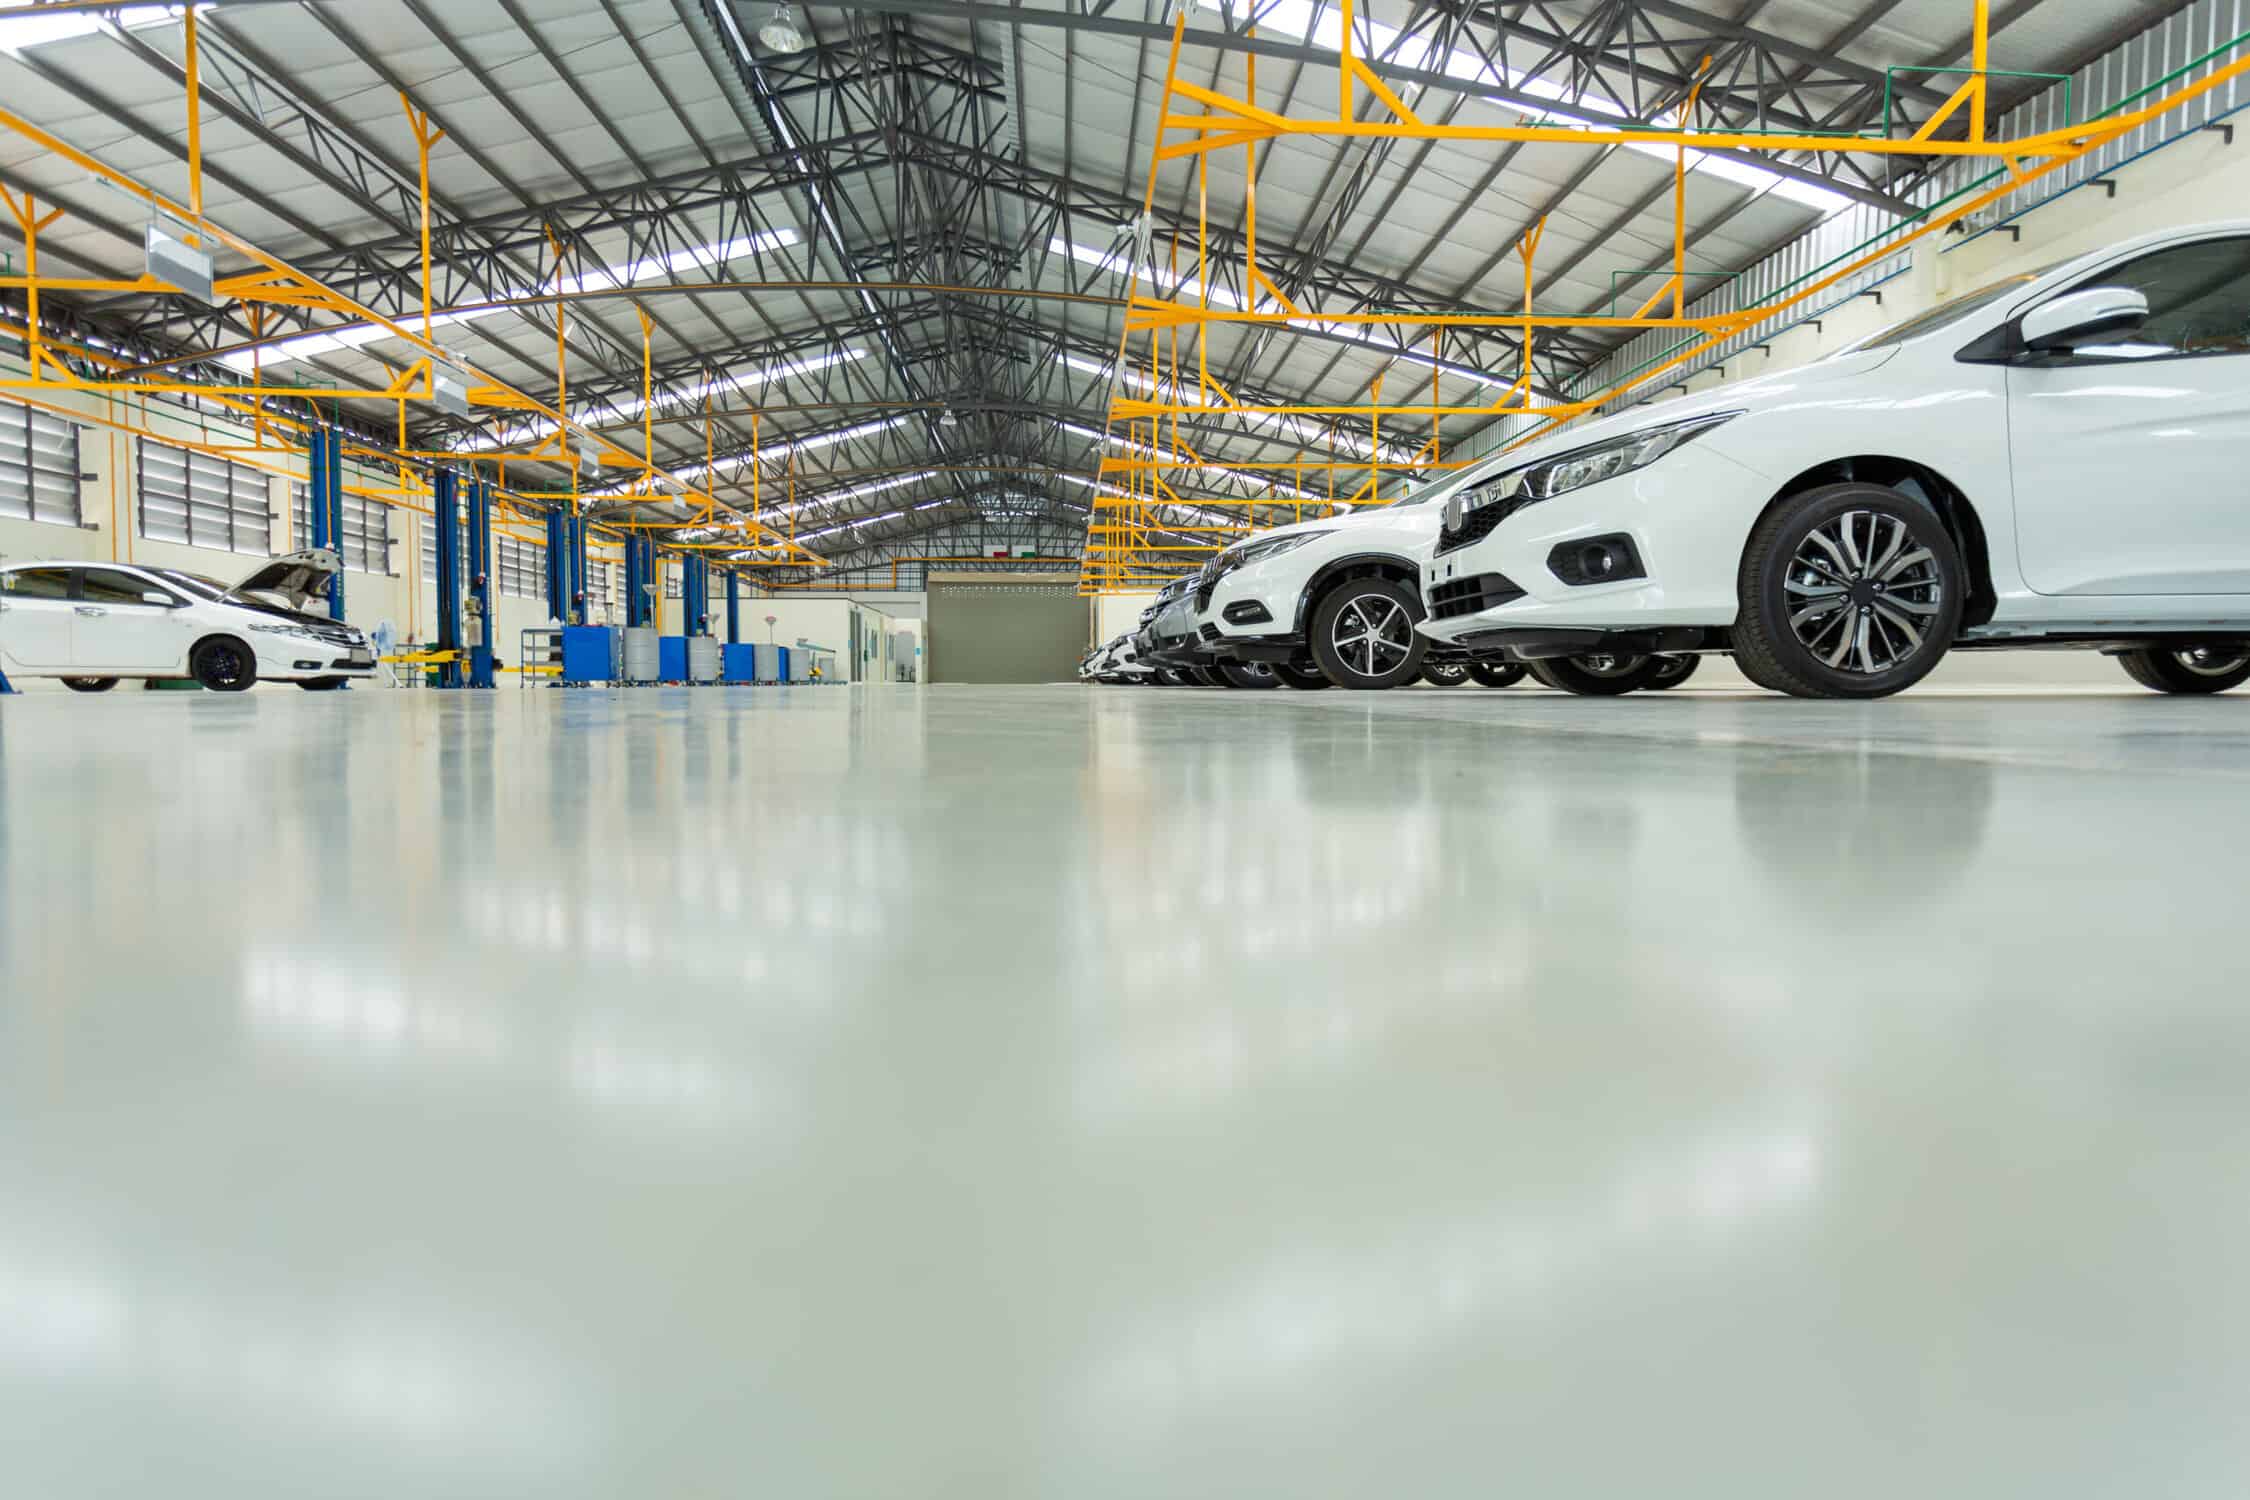 auto repair service station on epoxy floor in interior car-care